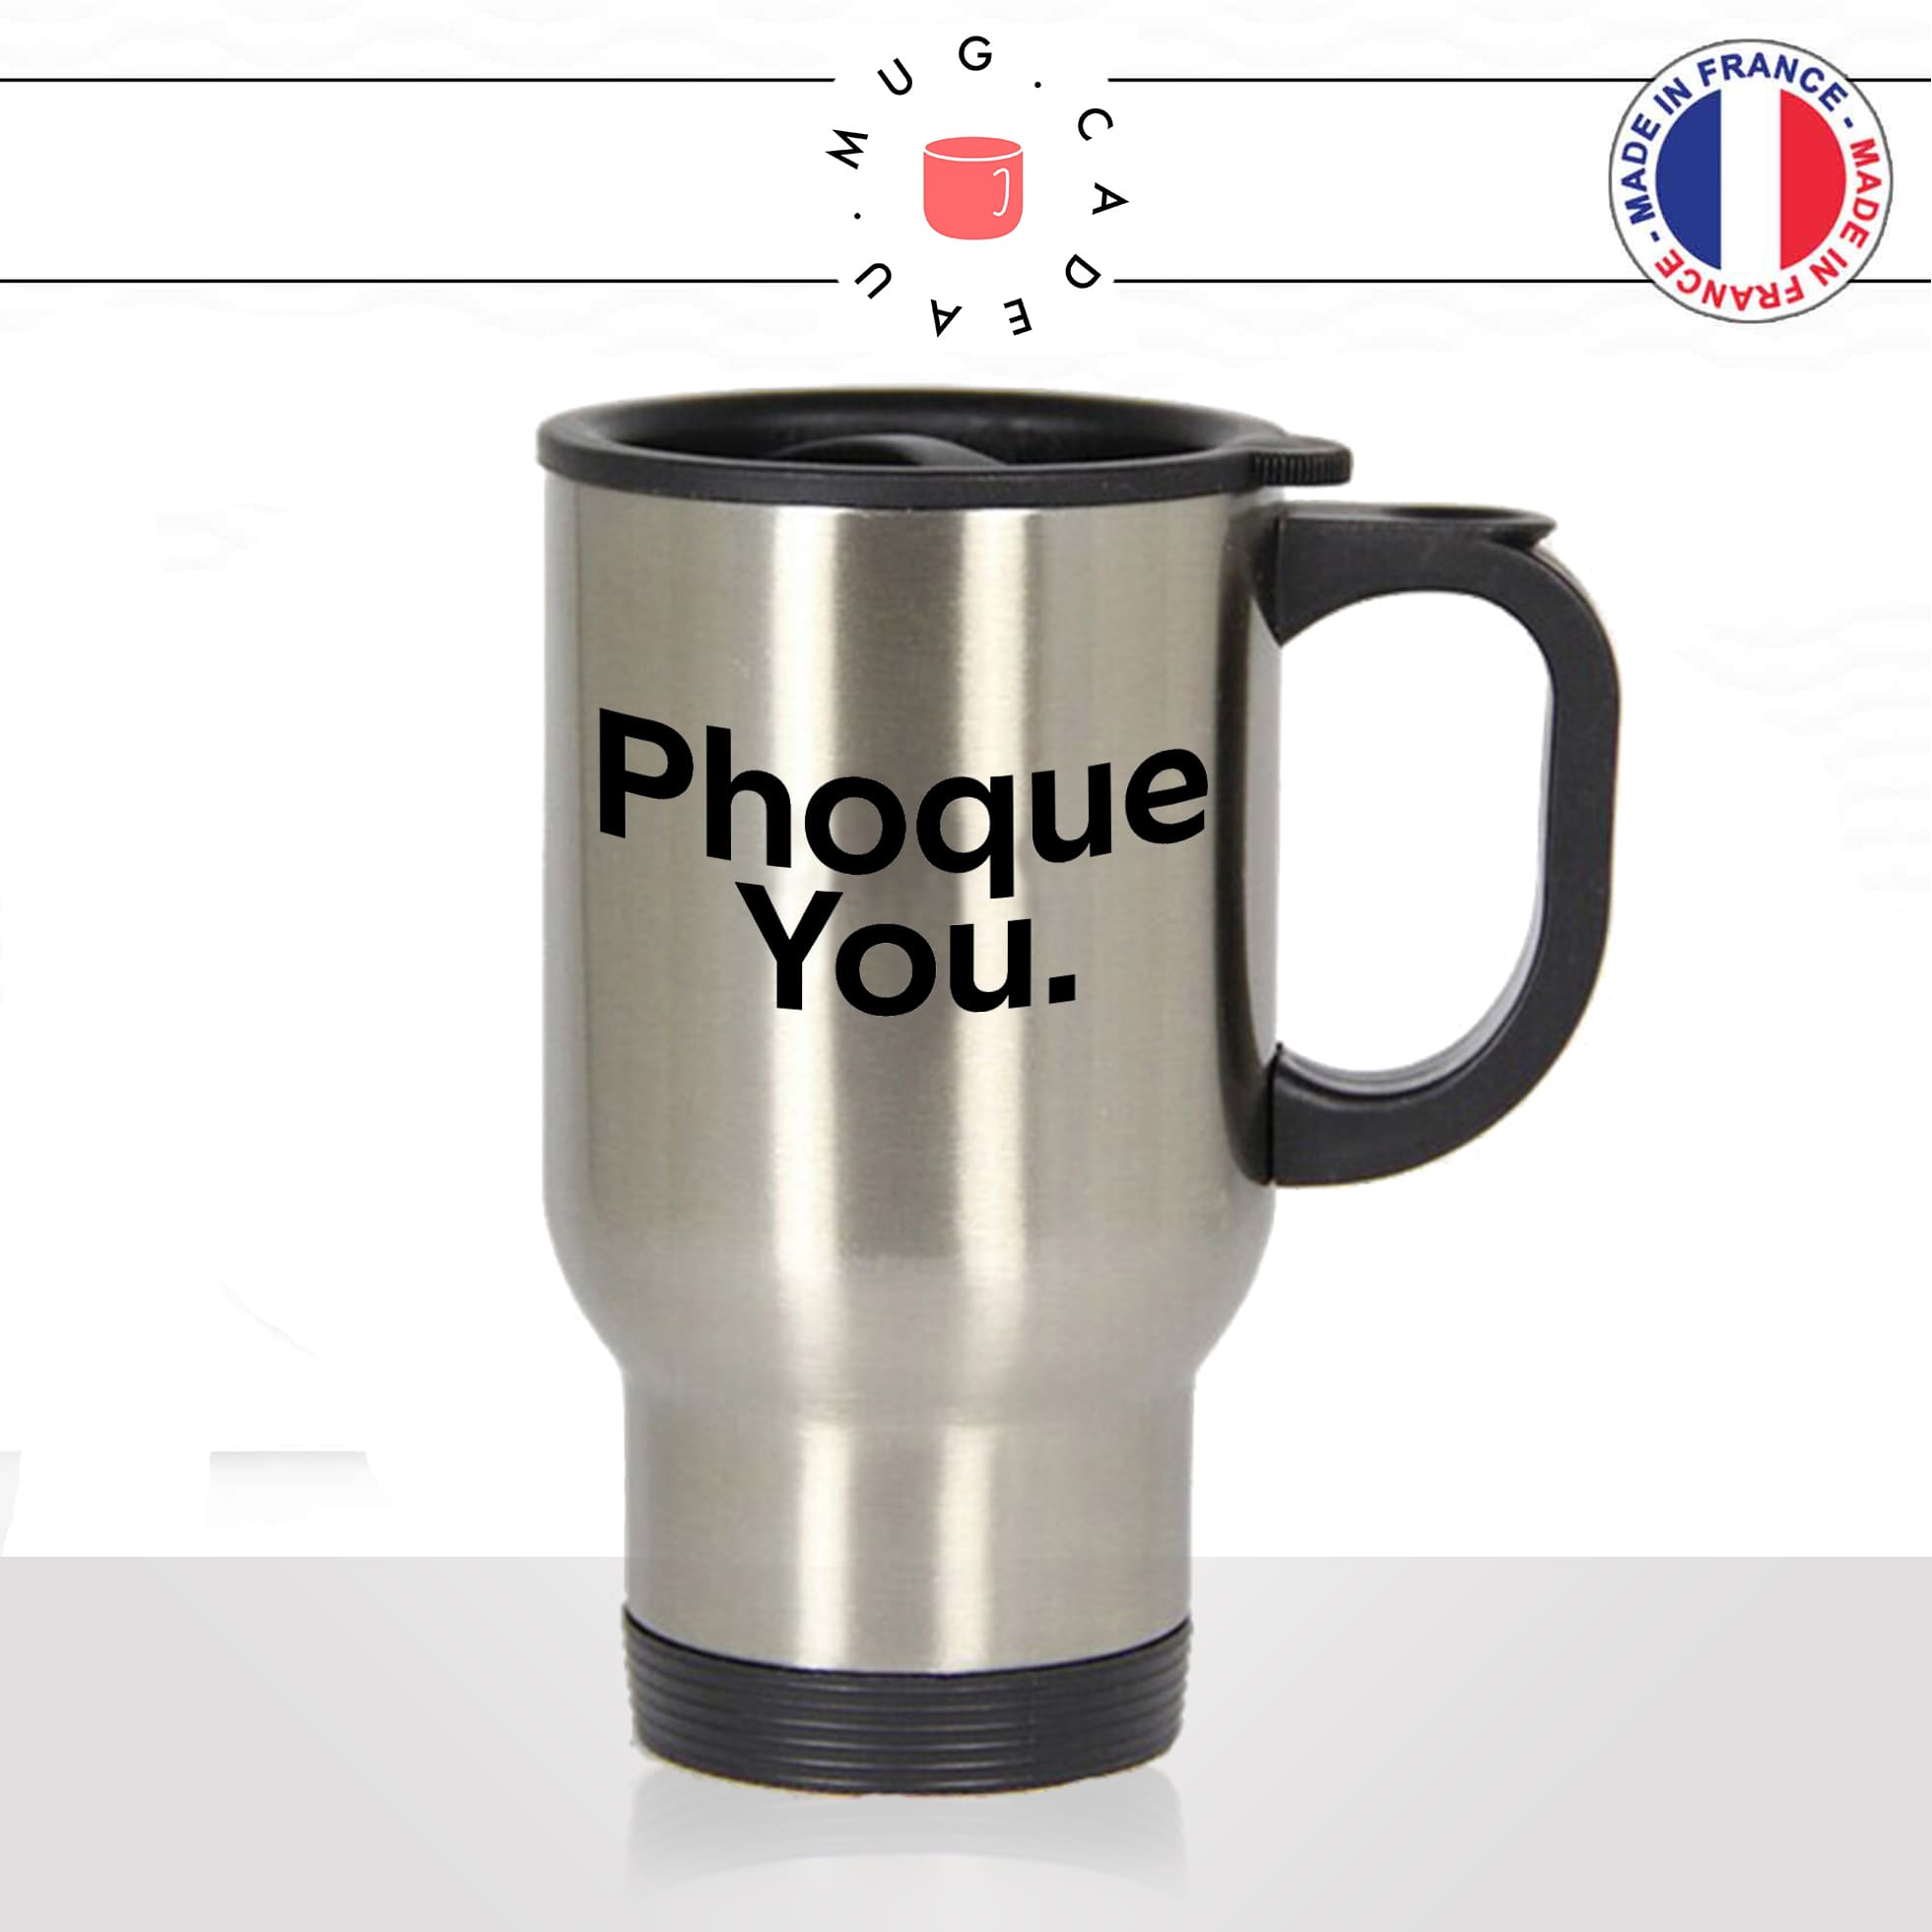 mug-tasse-thermos-isotherme-voyage-phoque-you-fuck-u-animal-drole-humour-fun-idée-cadeau-originale-cool2